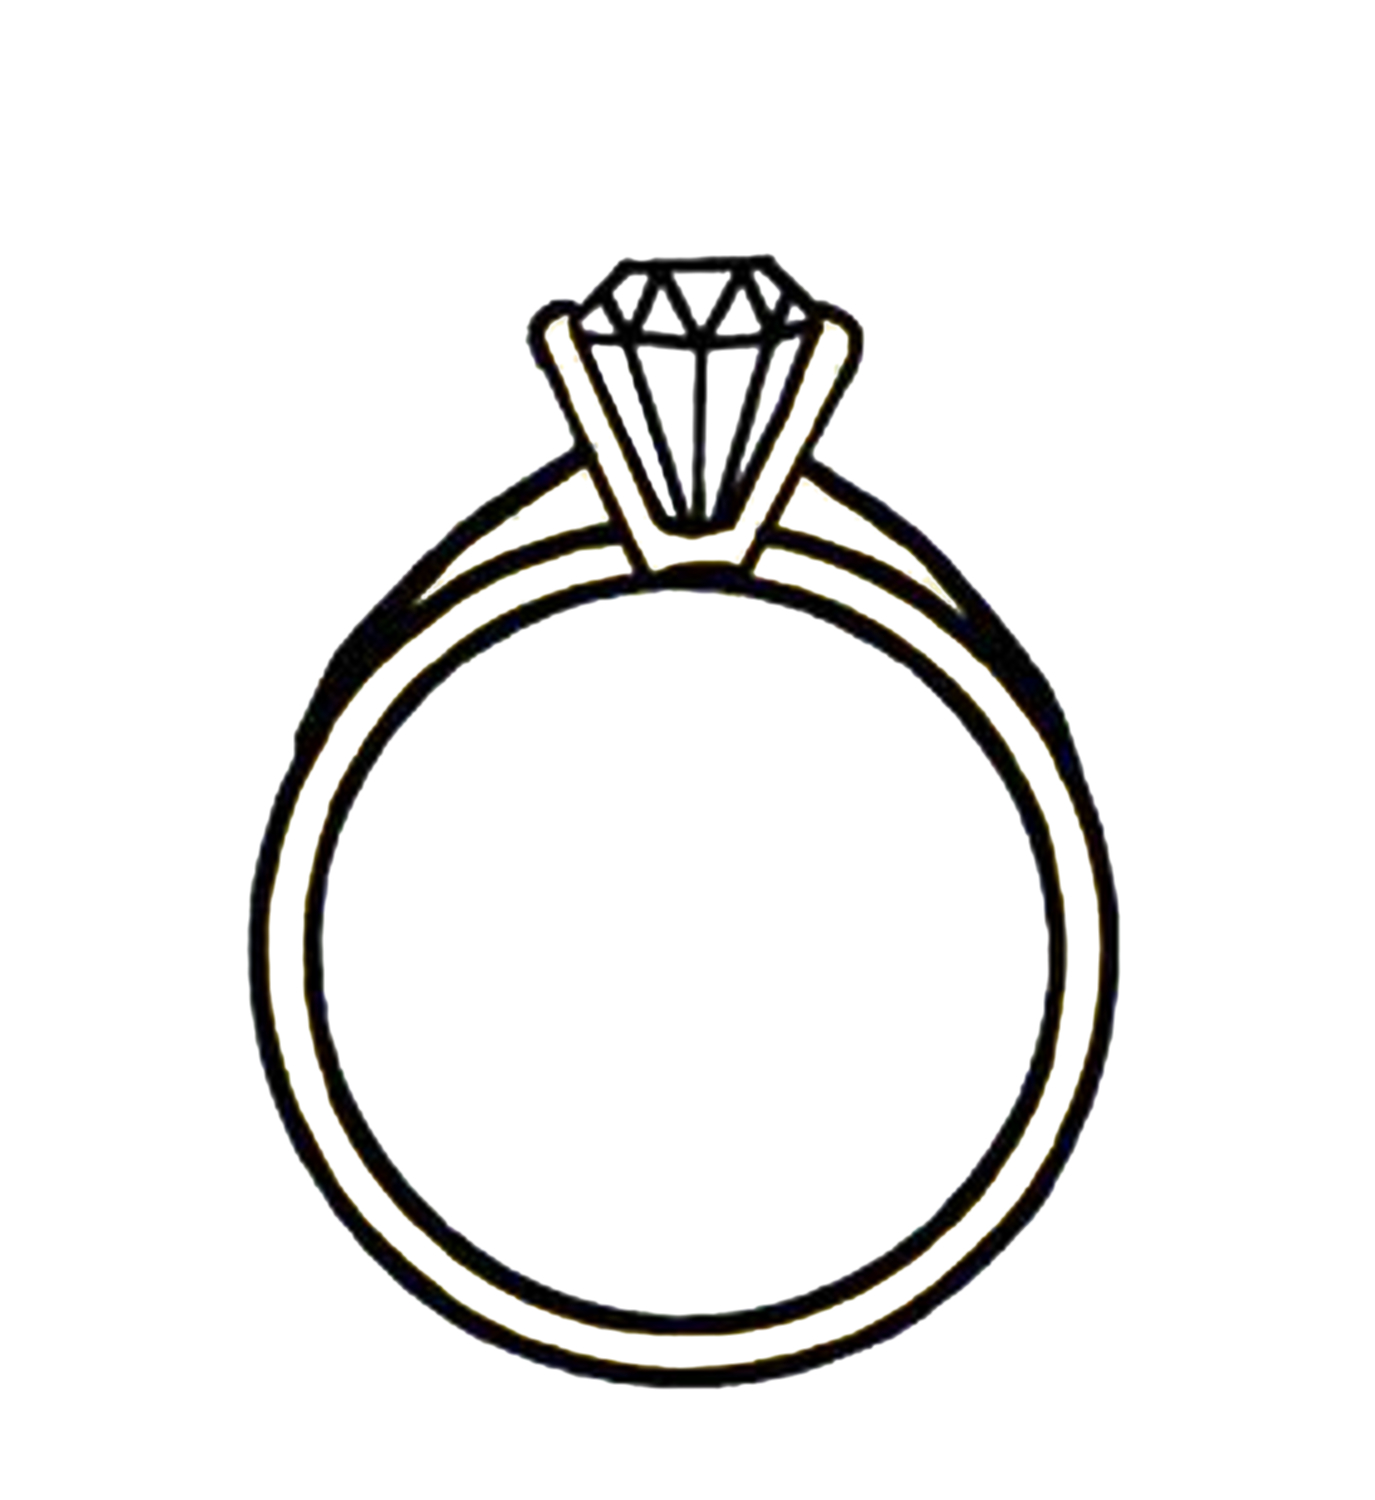 Free Diamond Ring Clip Art Black And White, Download Free Diamond Ring ...